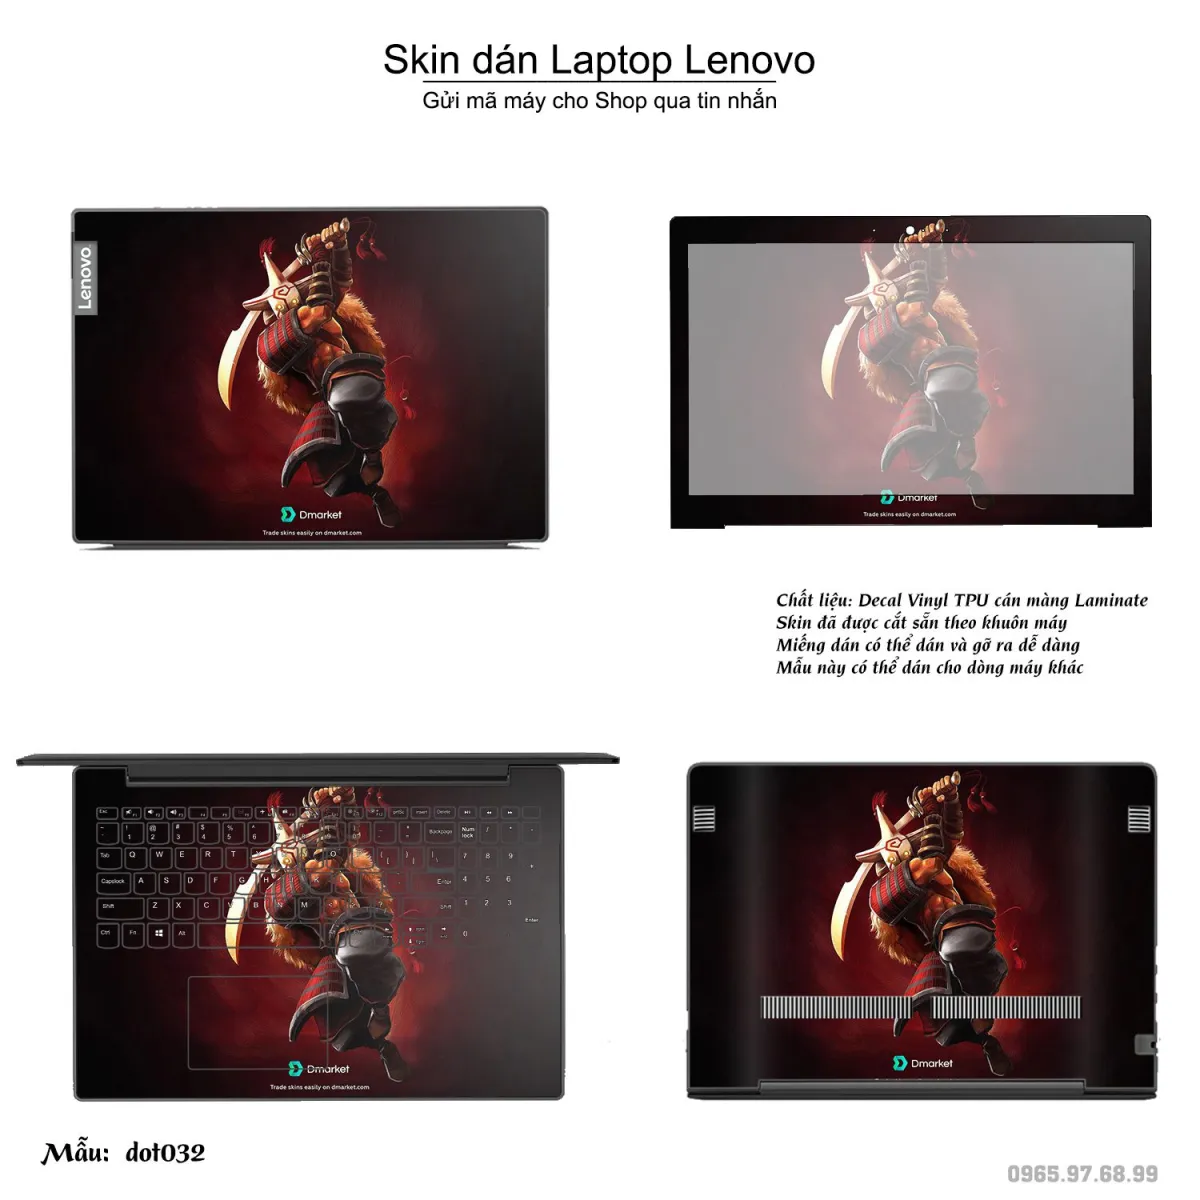 Decal Skin dán Laptop Lenovo mẫu Dota 2 (inbox mã máy cho shop) 